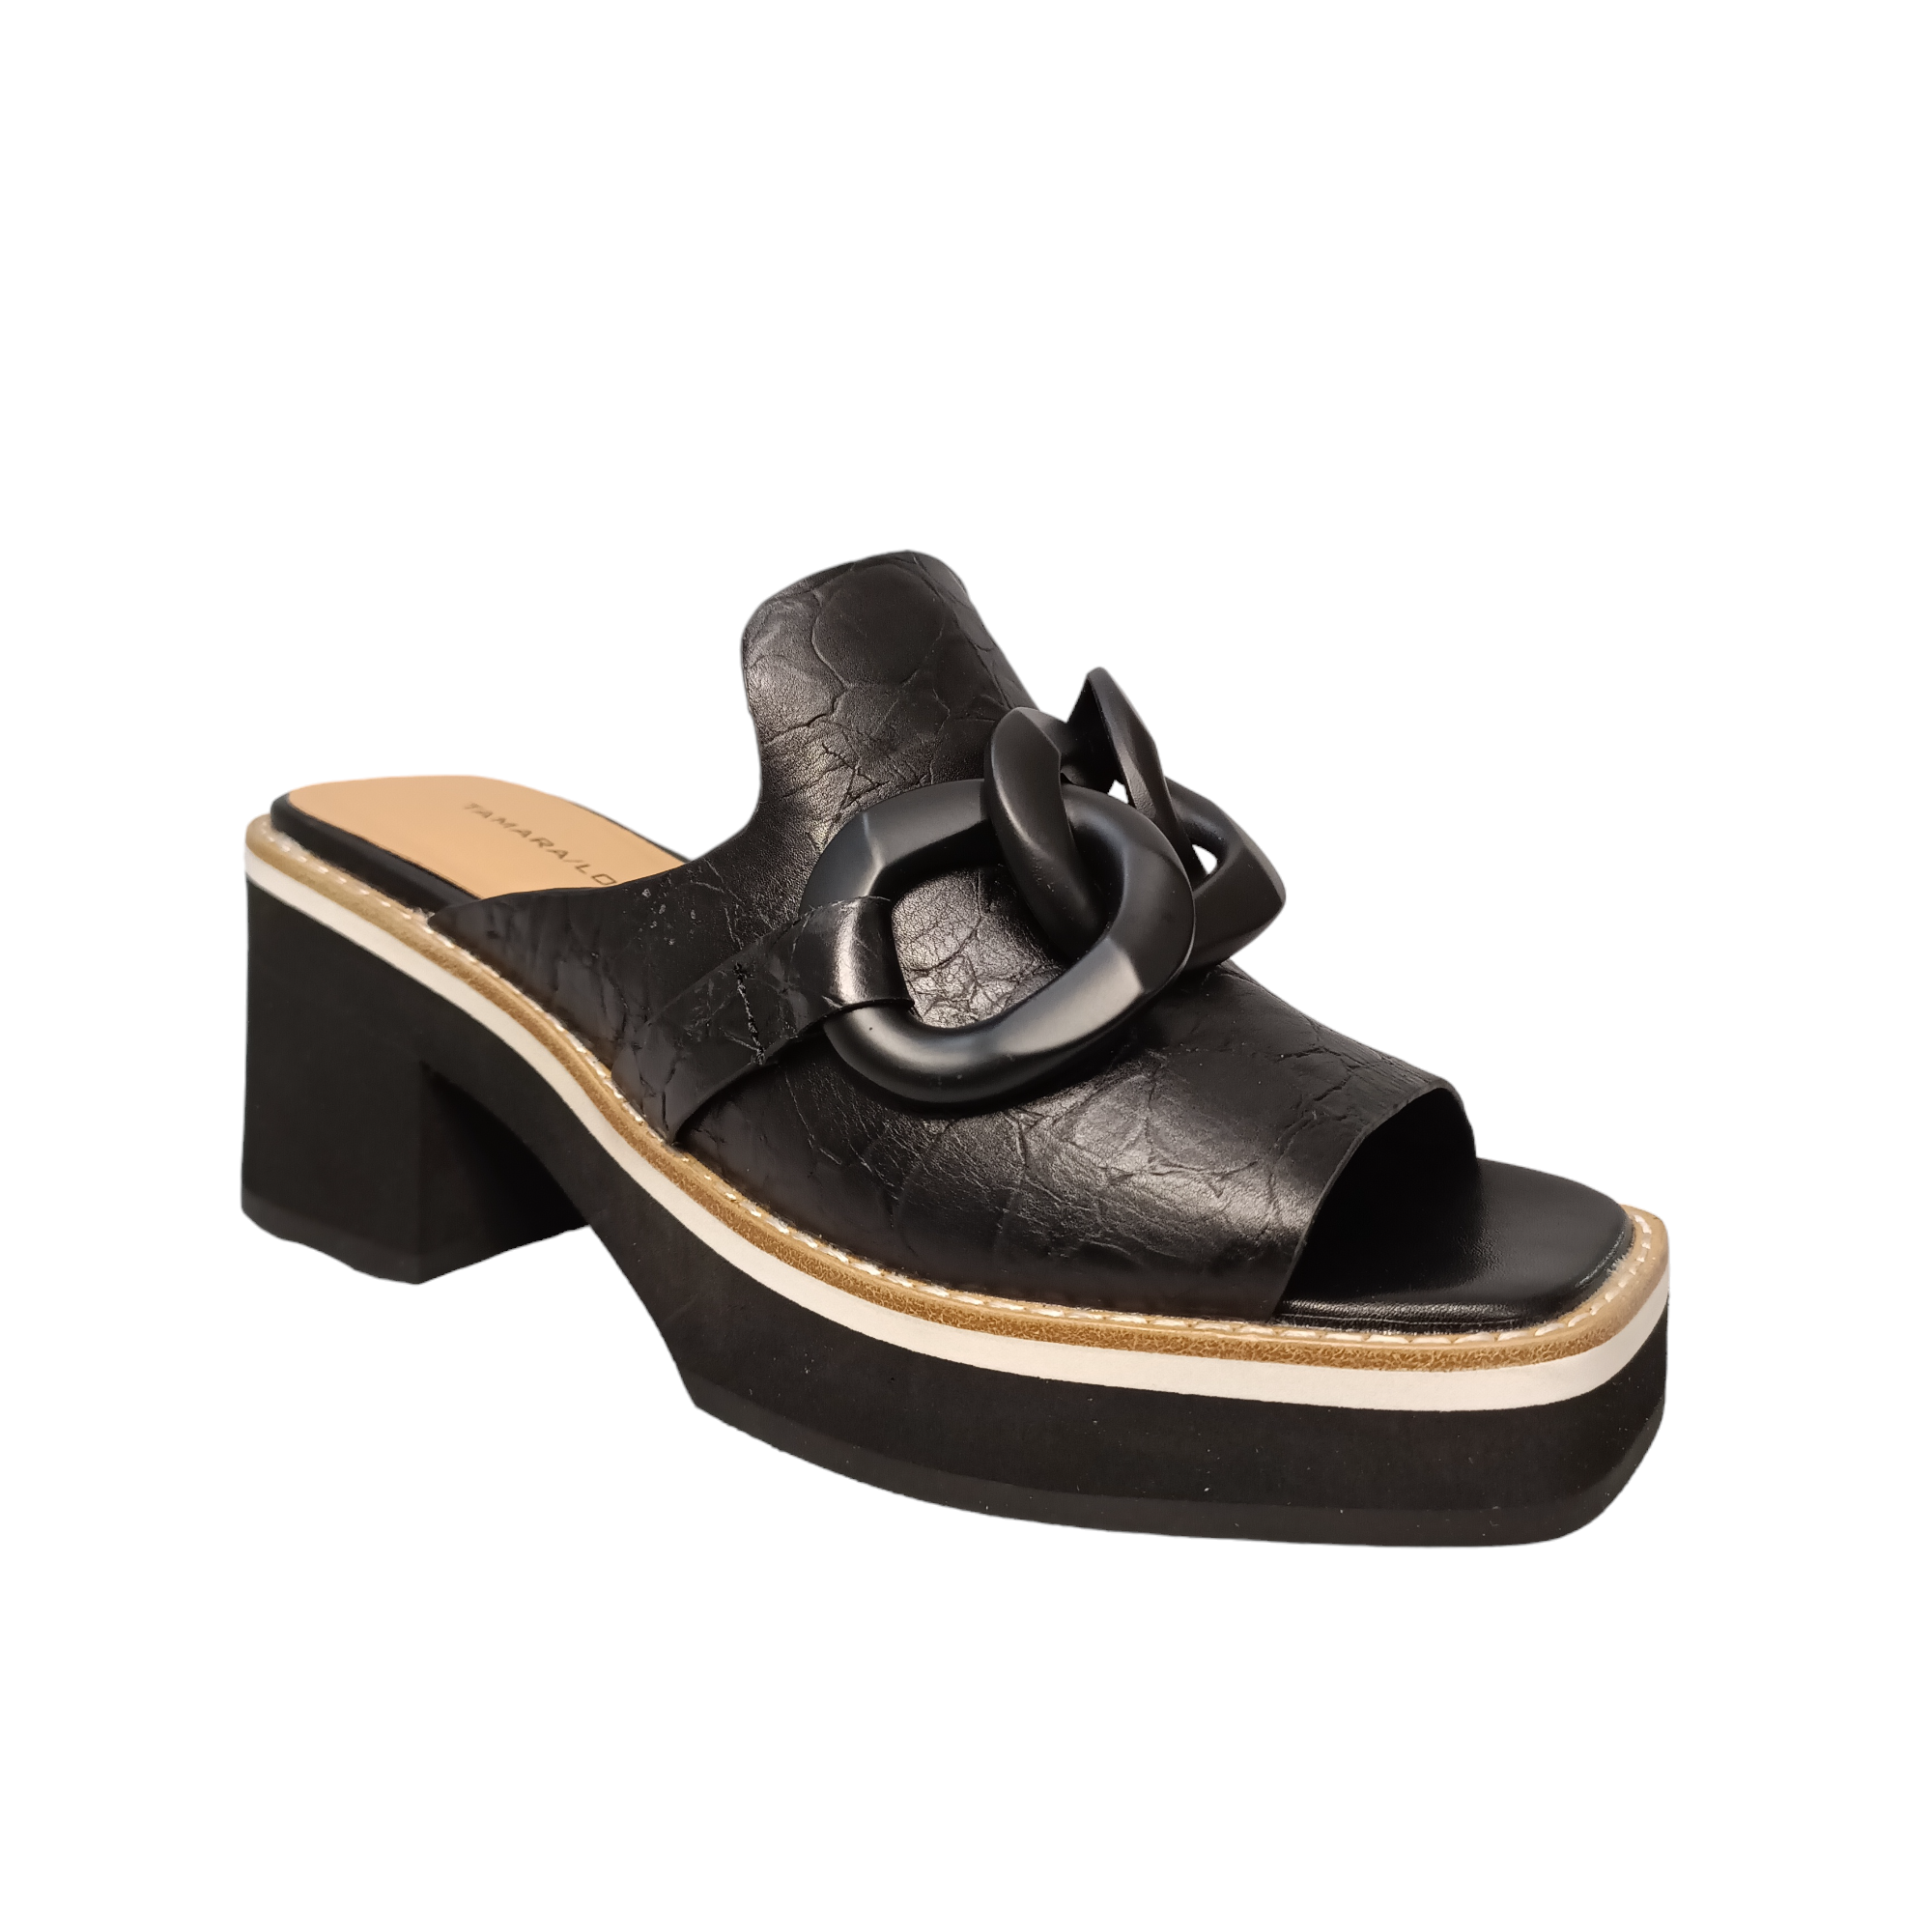 Balmy - shoe&me - Tamara - Slide - Heels, Slides/Scuffs, Summer, Womens